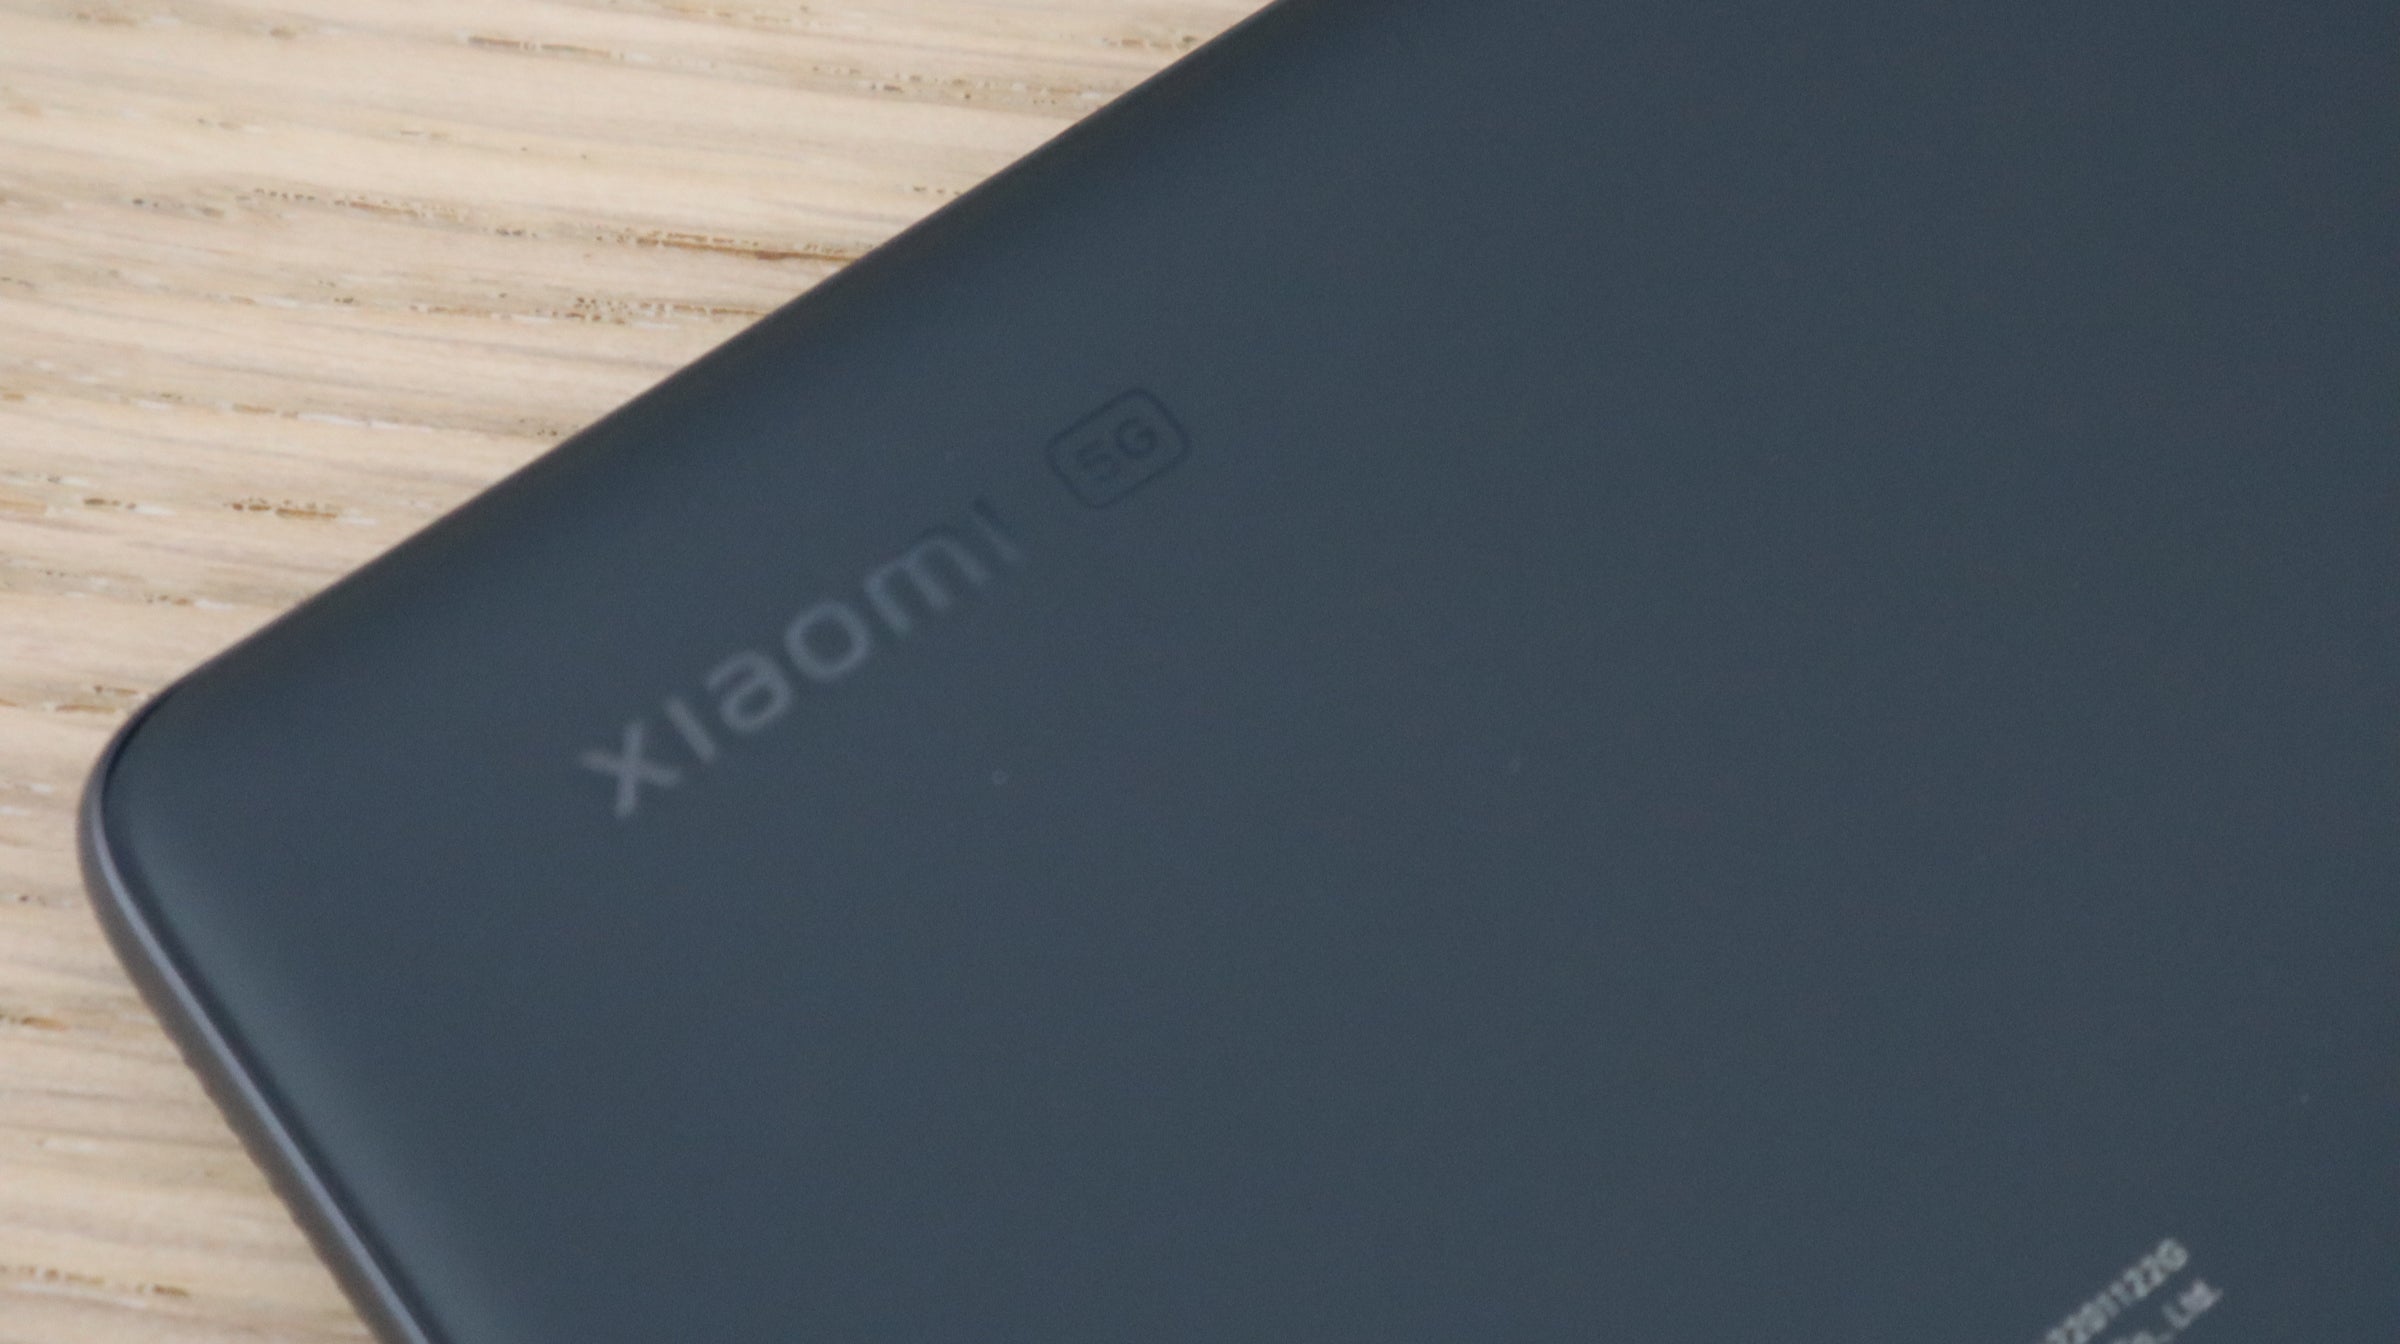 Xiaomi 12 Pro - Galeria de imagens